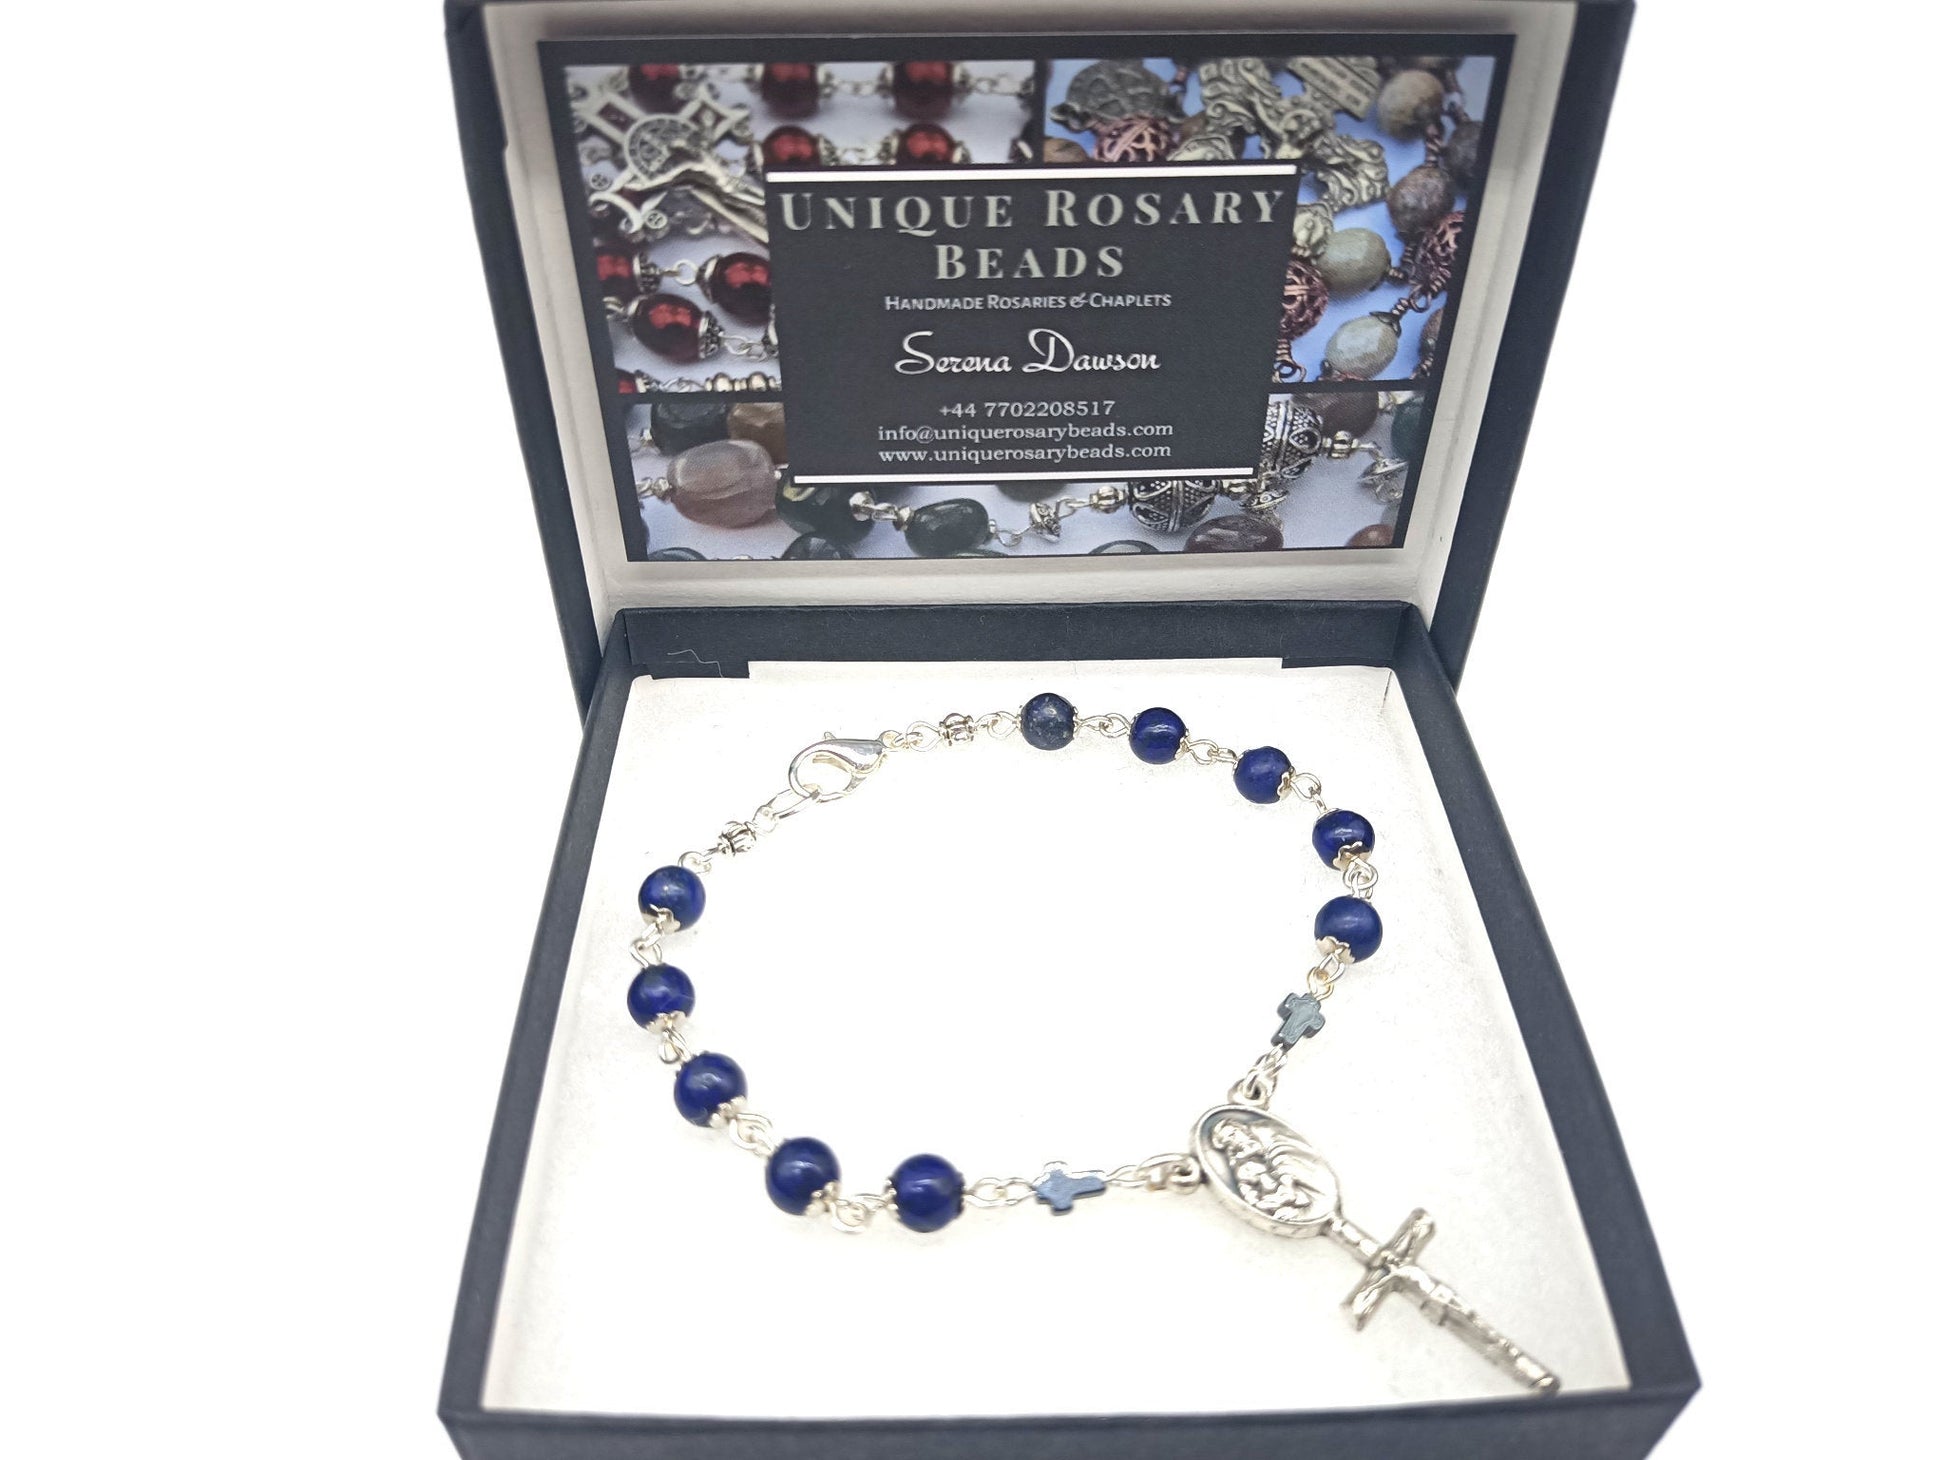 35 pcs Glass Pearl Rosaries Mini Rosaries/Decade Rosary First